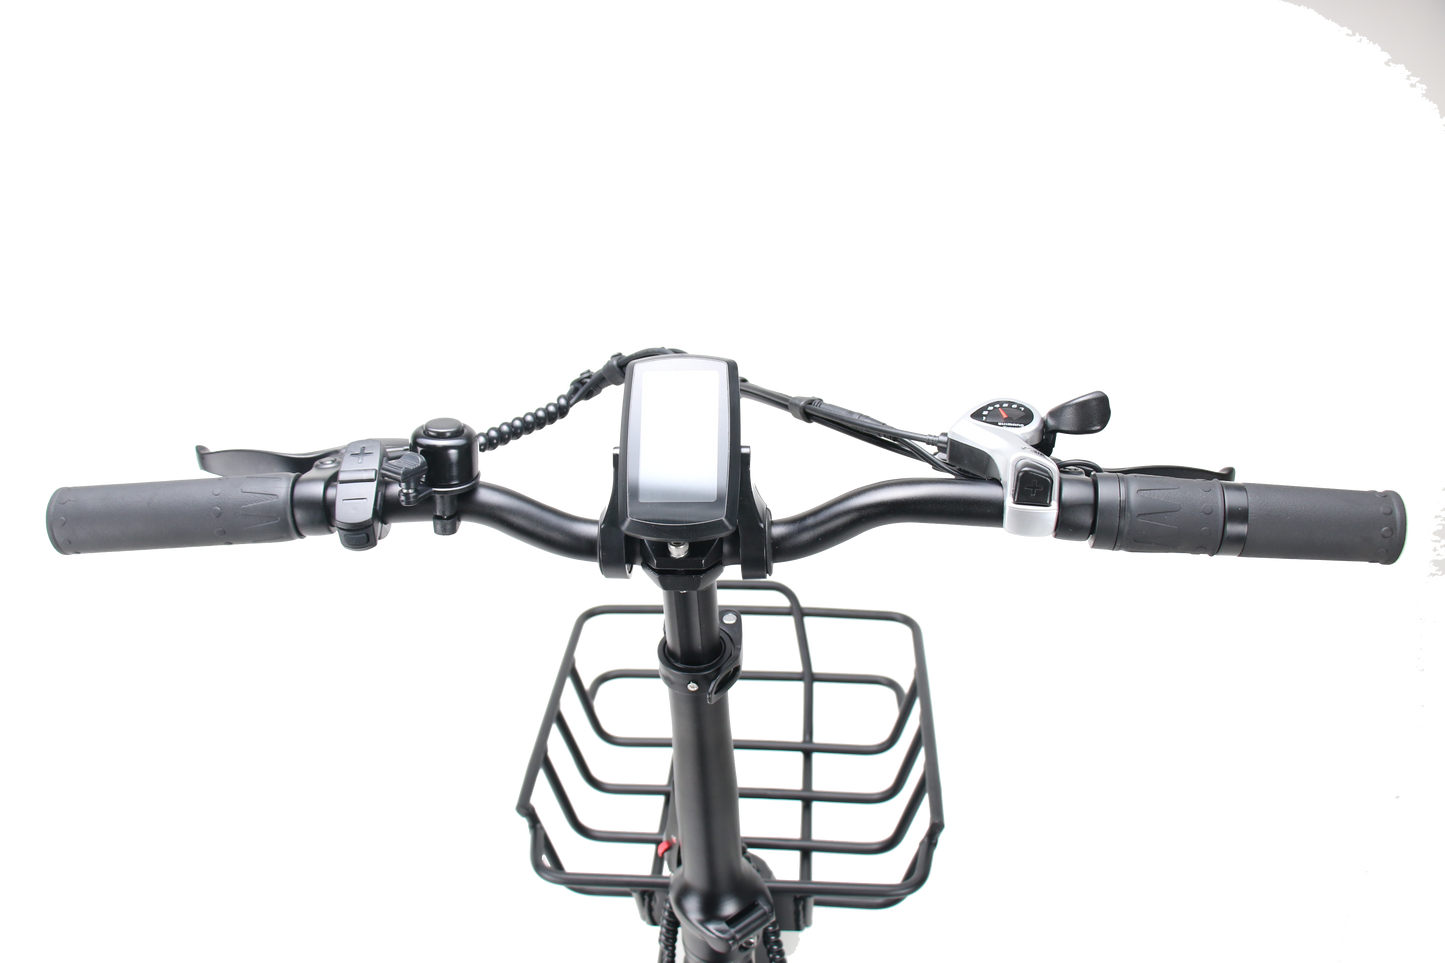 500 Watt Folding Electric Bike with StepThru Frame - Dash